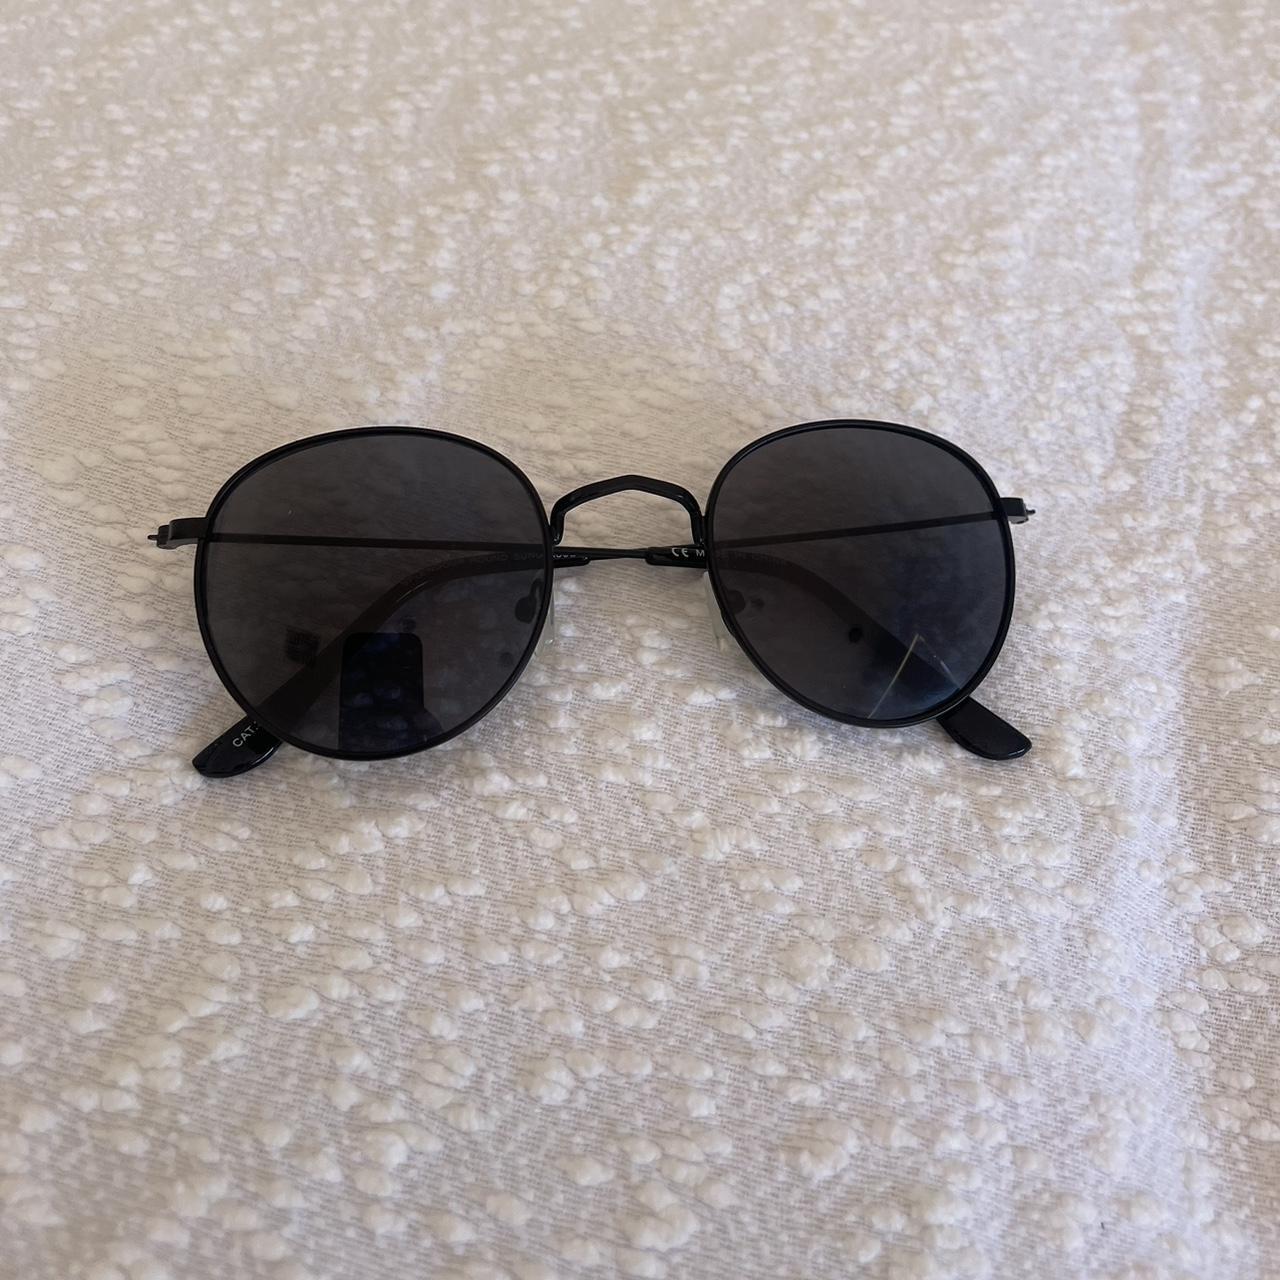 Black sunglasses - Depop